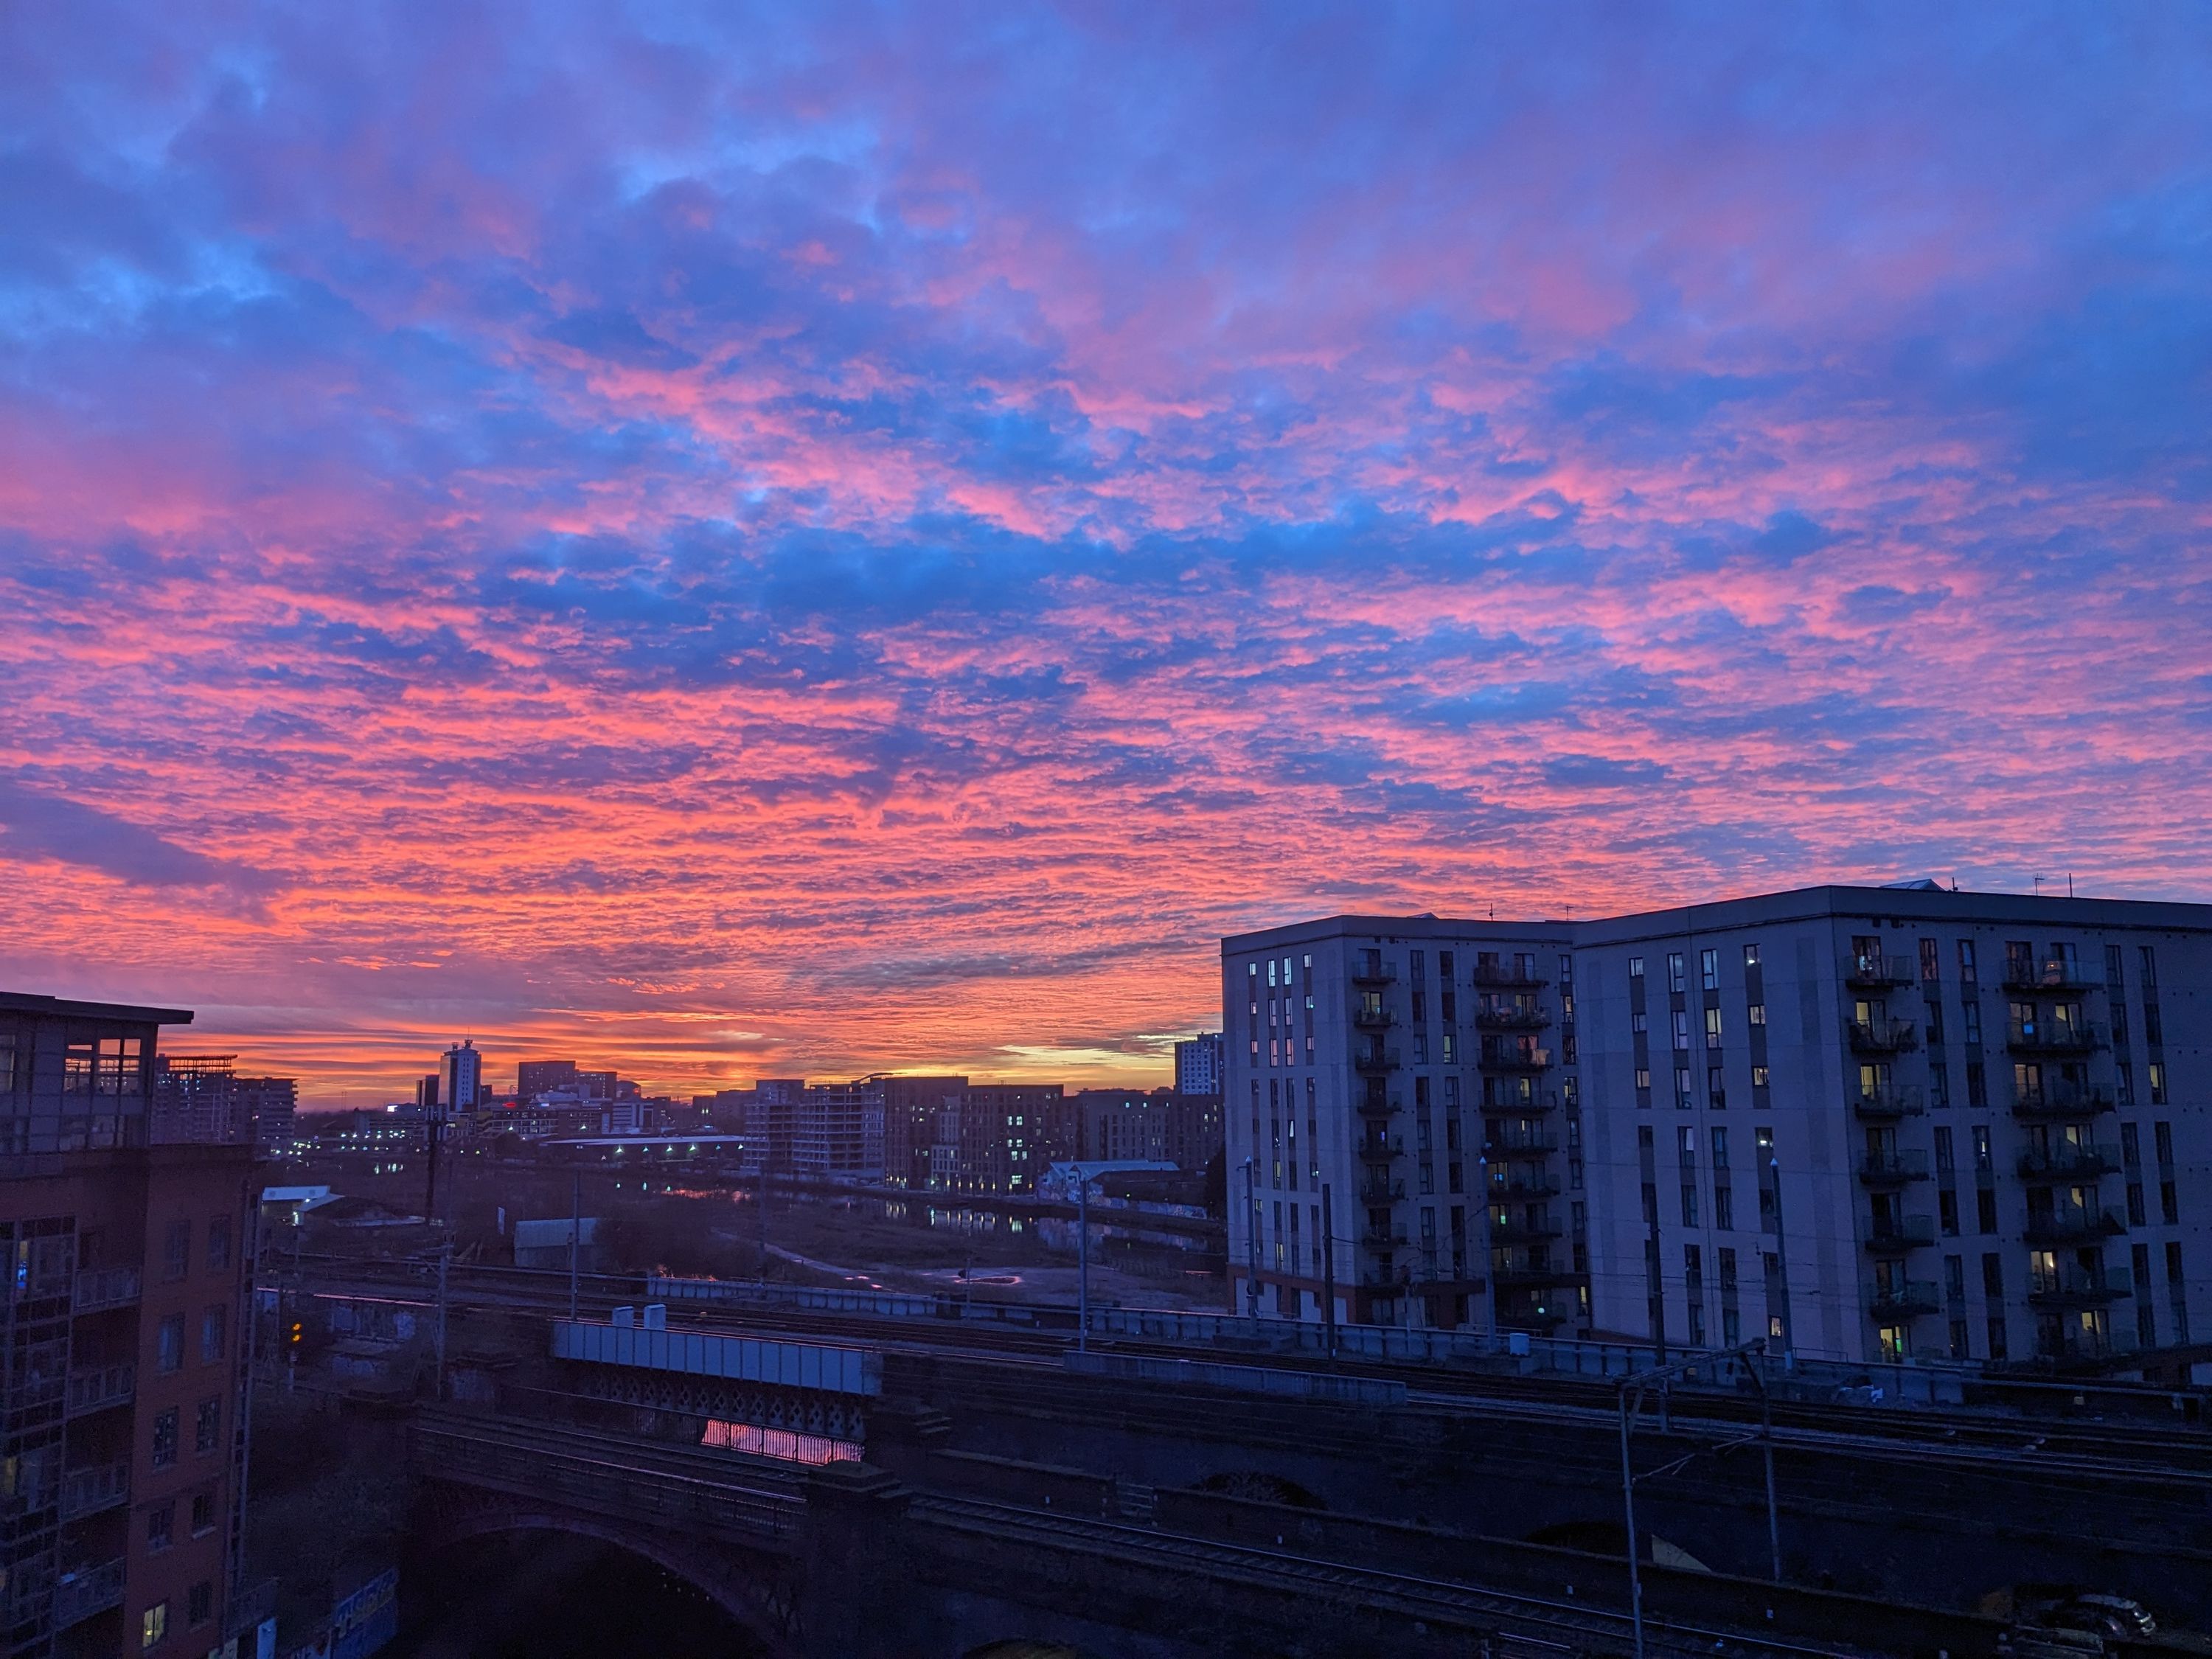 Manchester at dusk